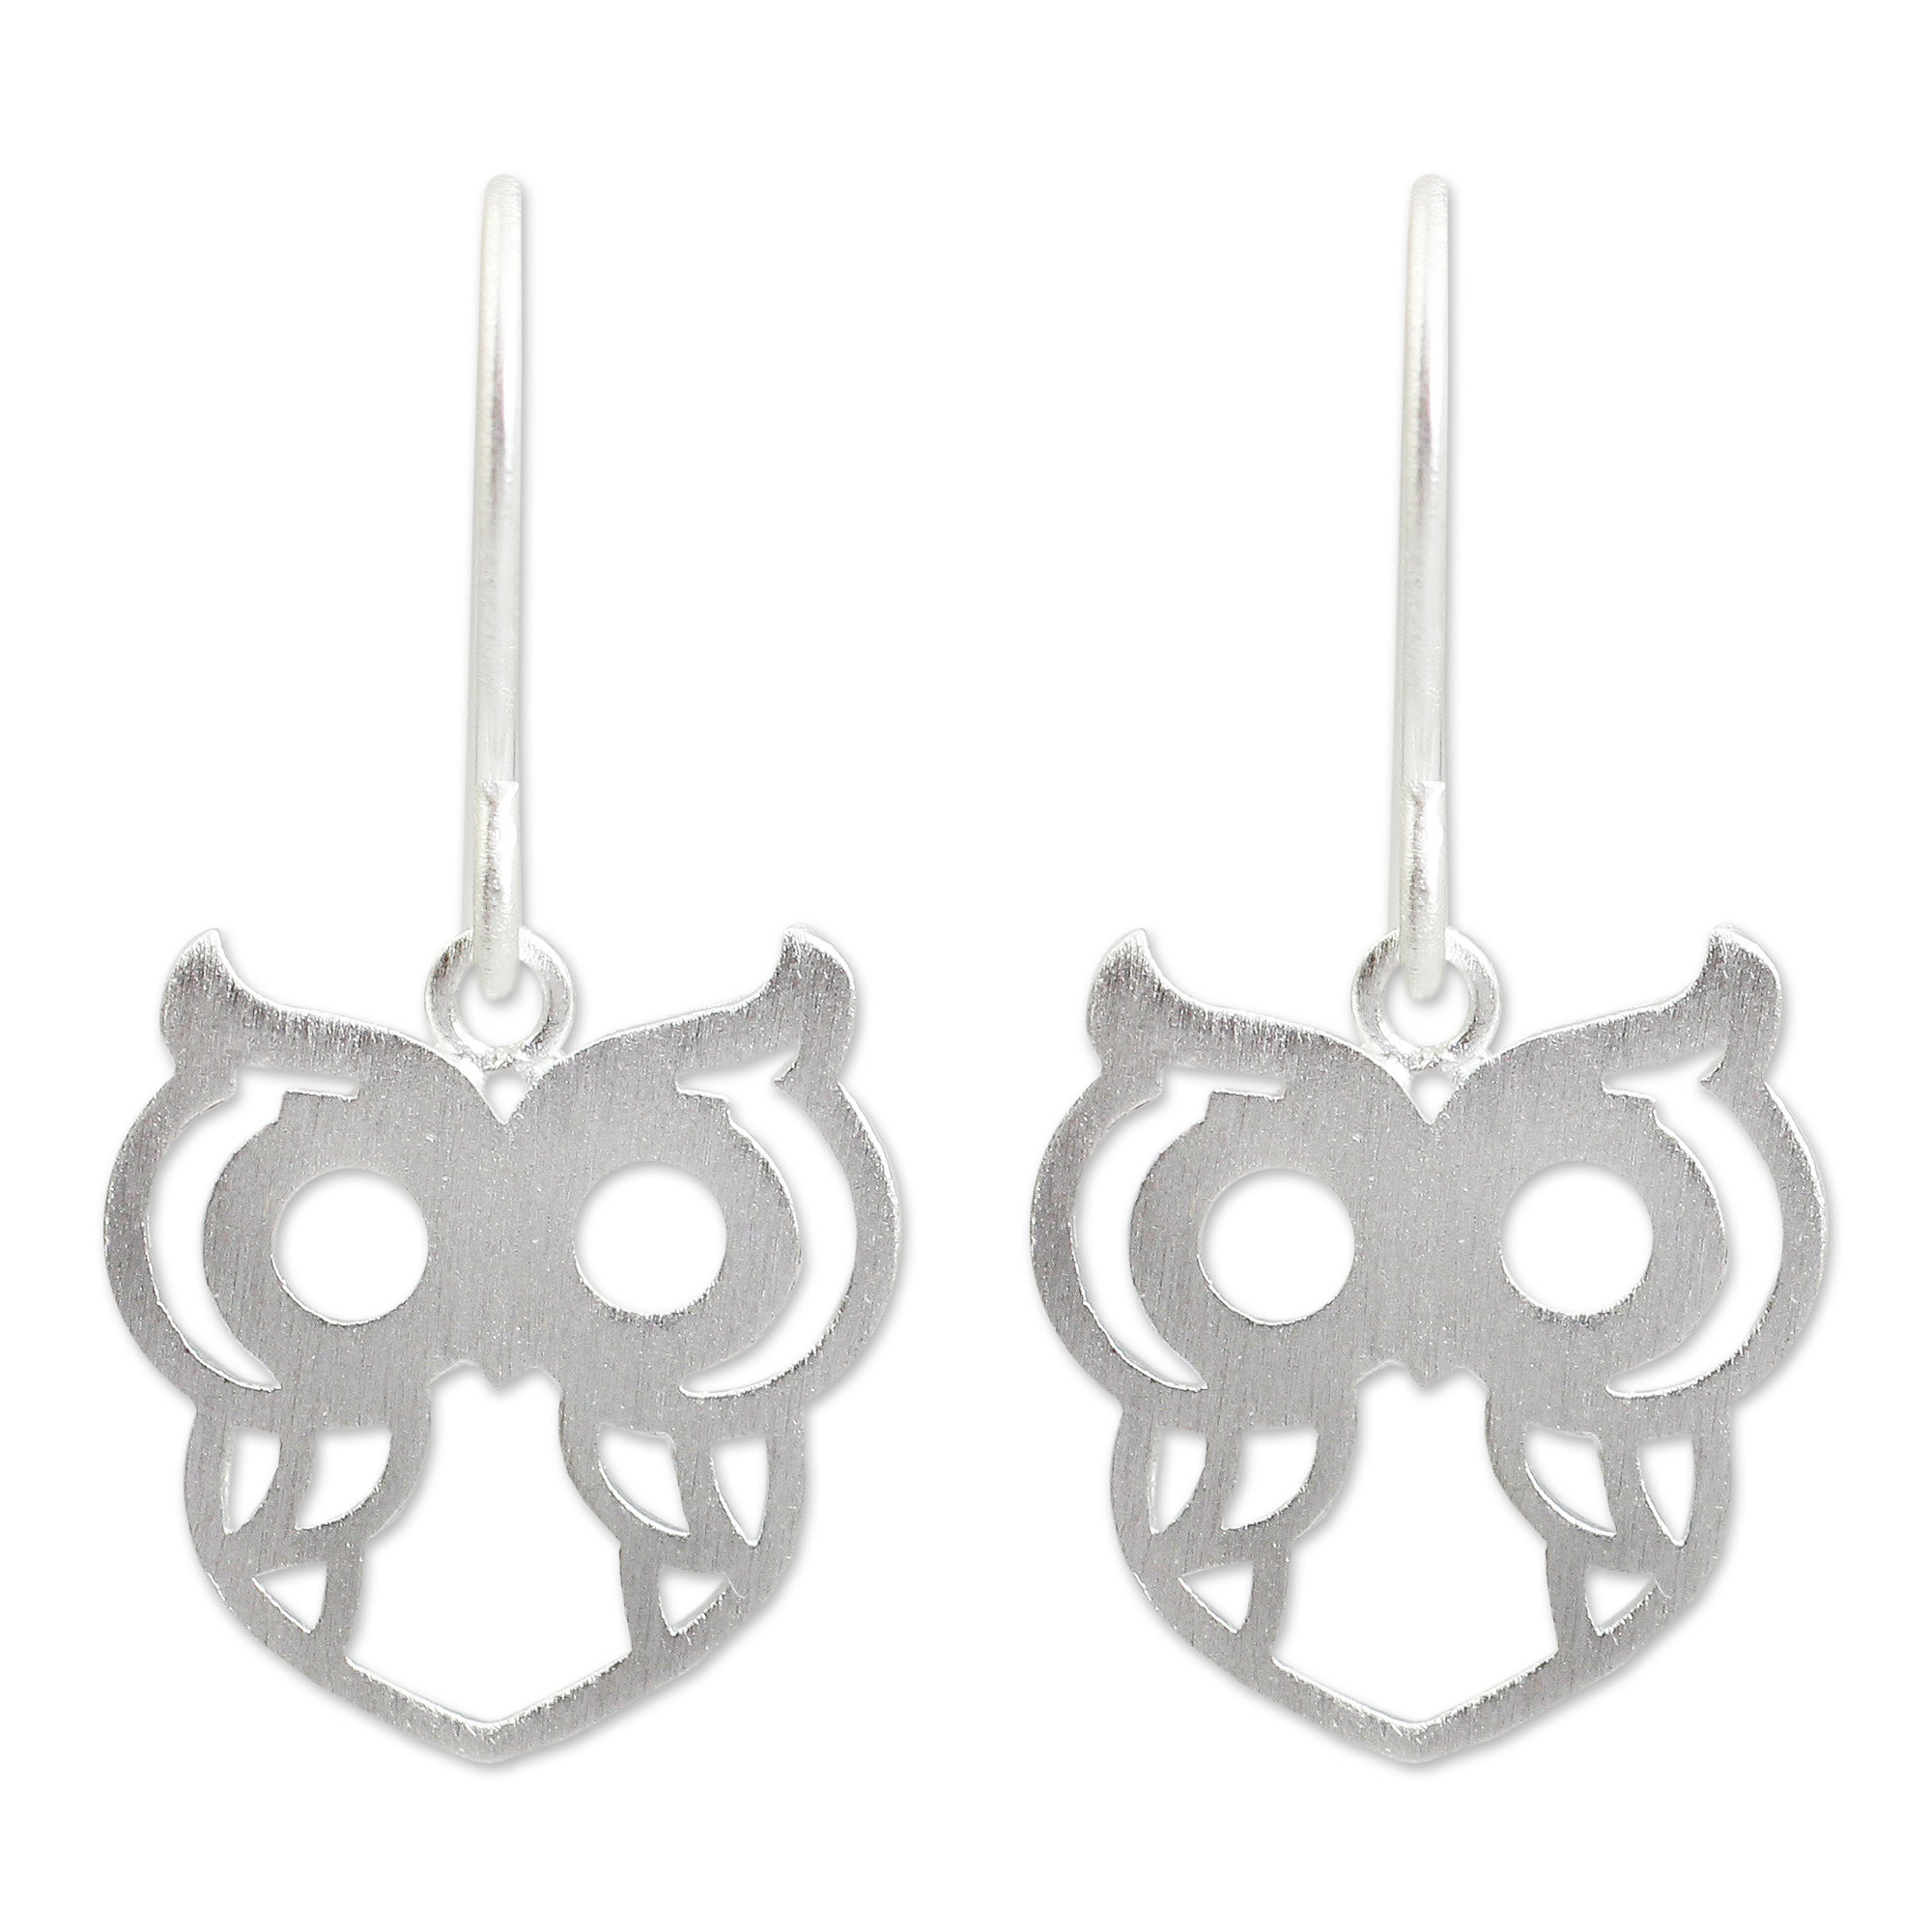 Artisan Crafted Silver Owl Earrings - Perky Owl | NOVICA